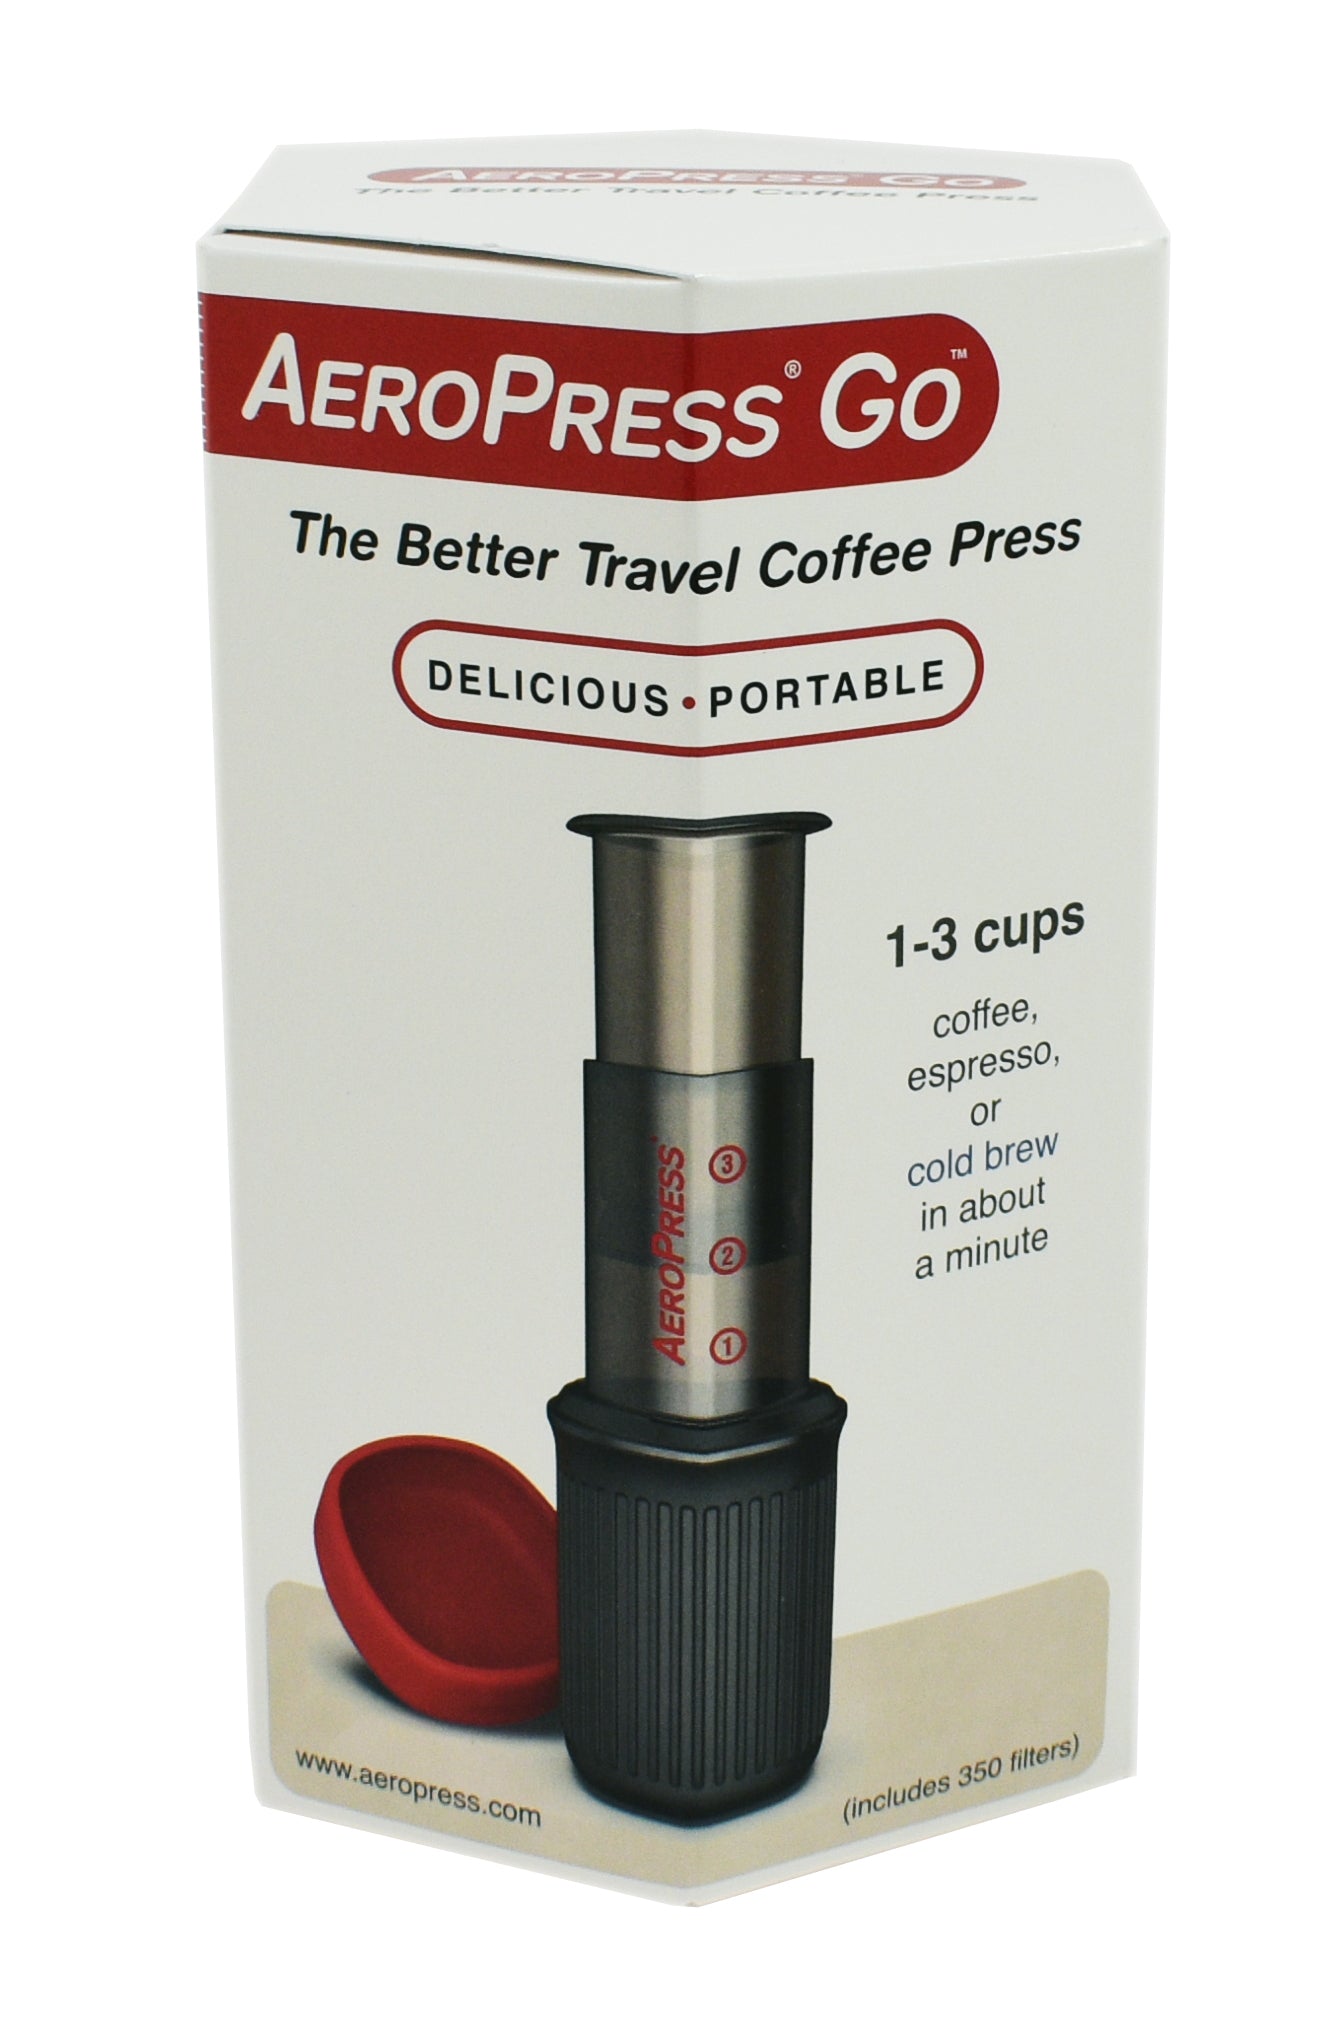 AeroPress Go Complete Travel Coffee and Espresso Maker